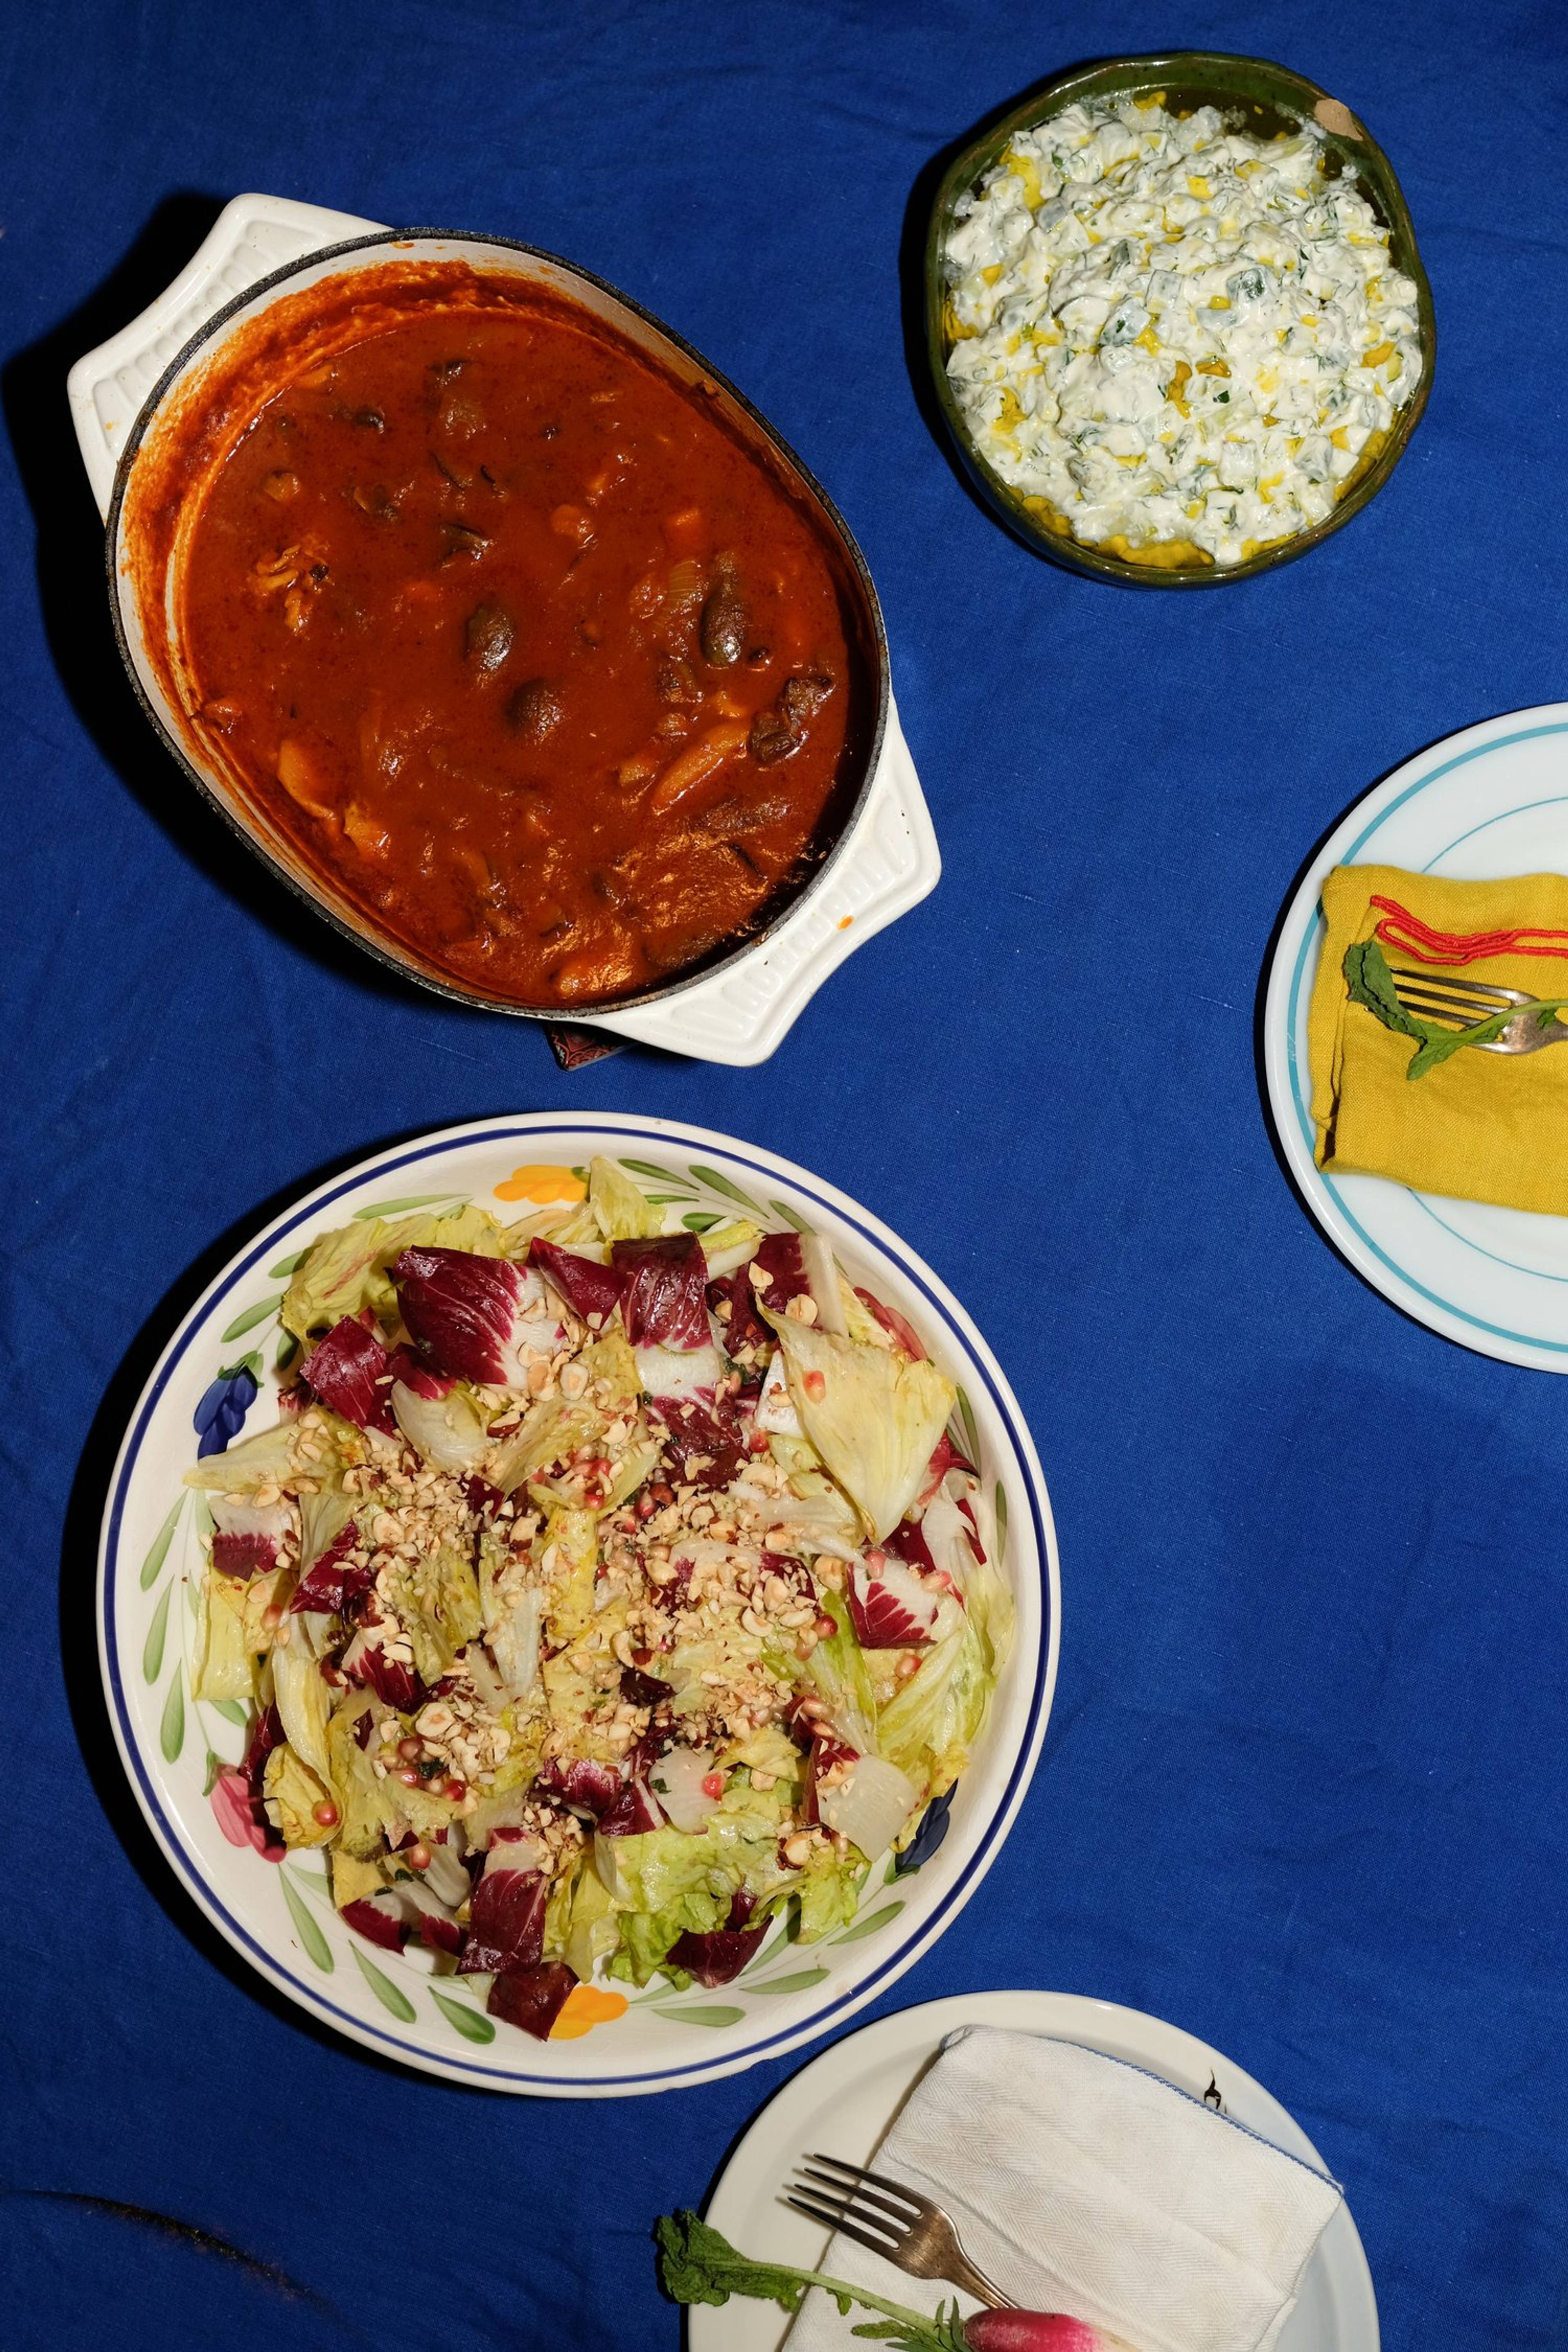 radicchio salad served on a plate on blue tablecloth